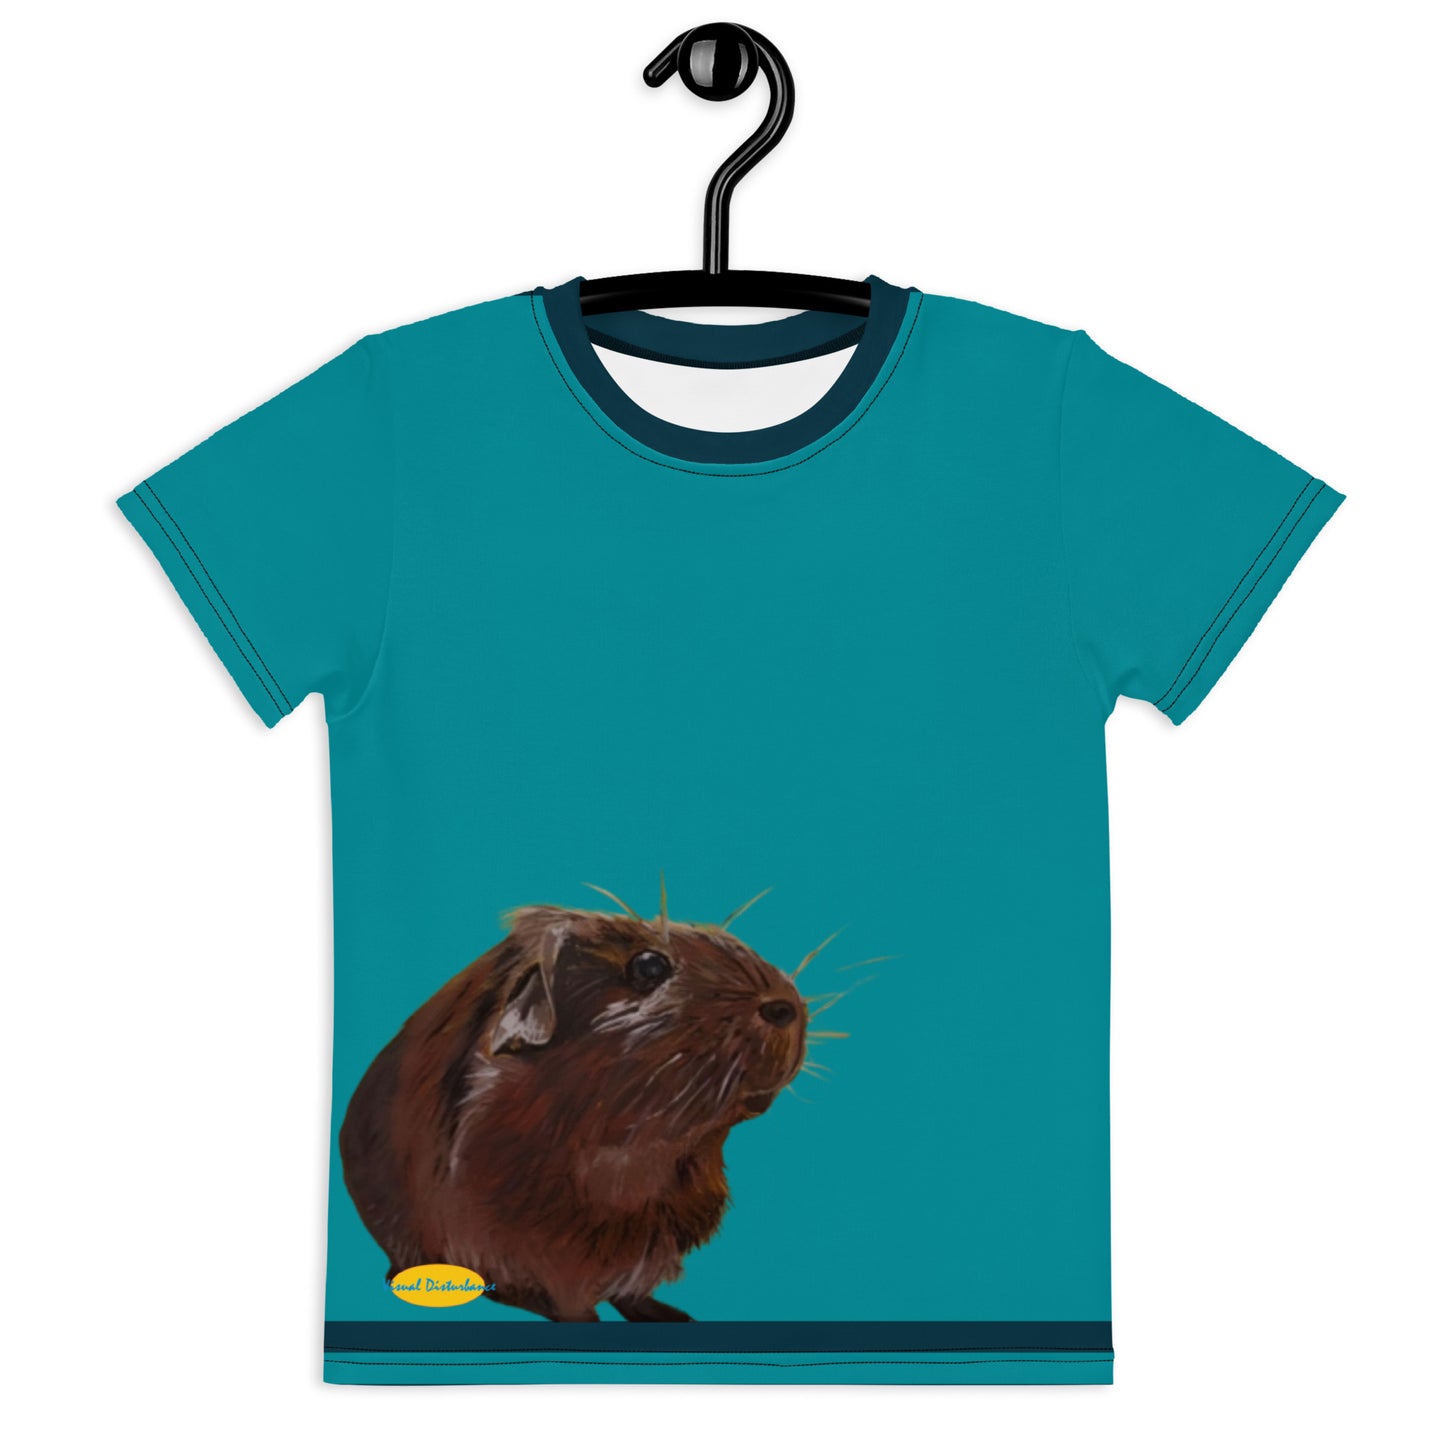 Gunther the Guinea Pig (Teal) Kids crew neck t-shirt